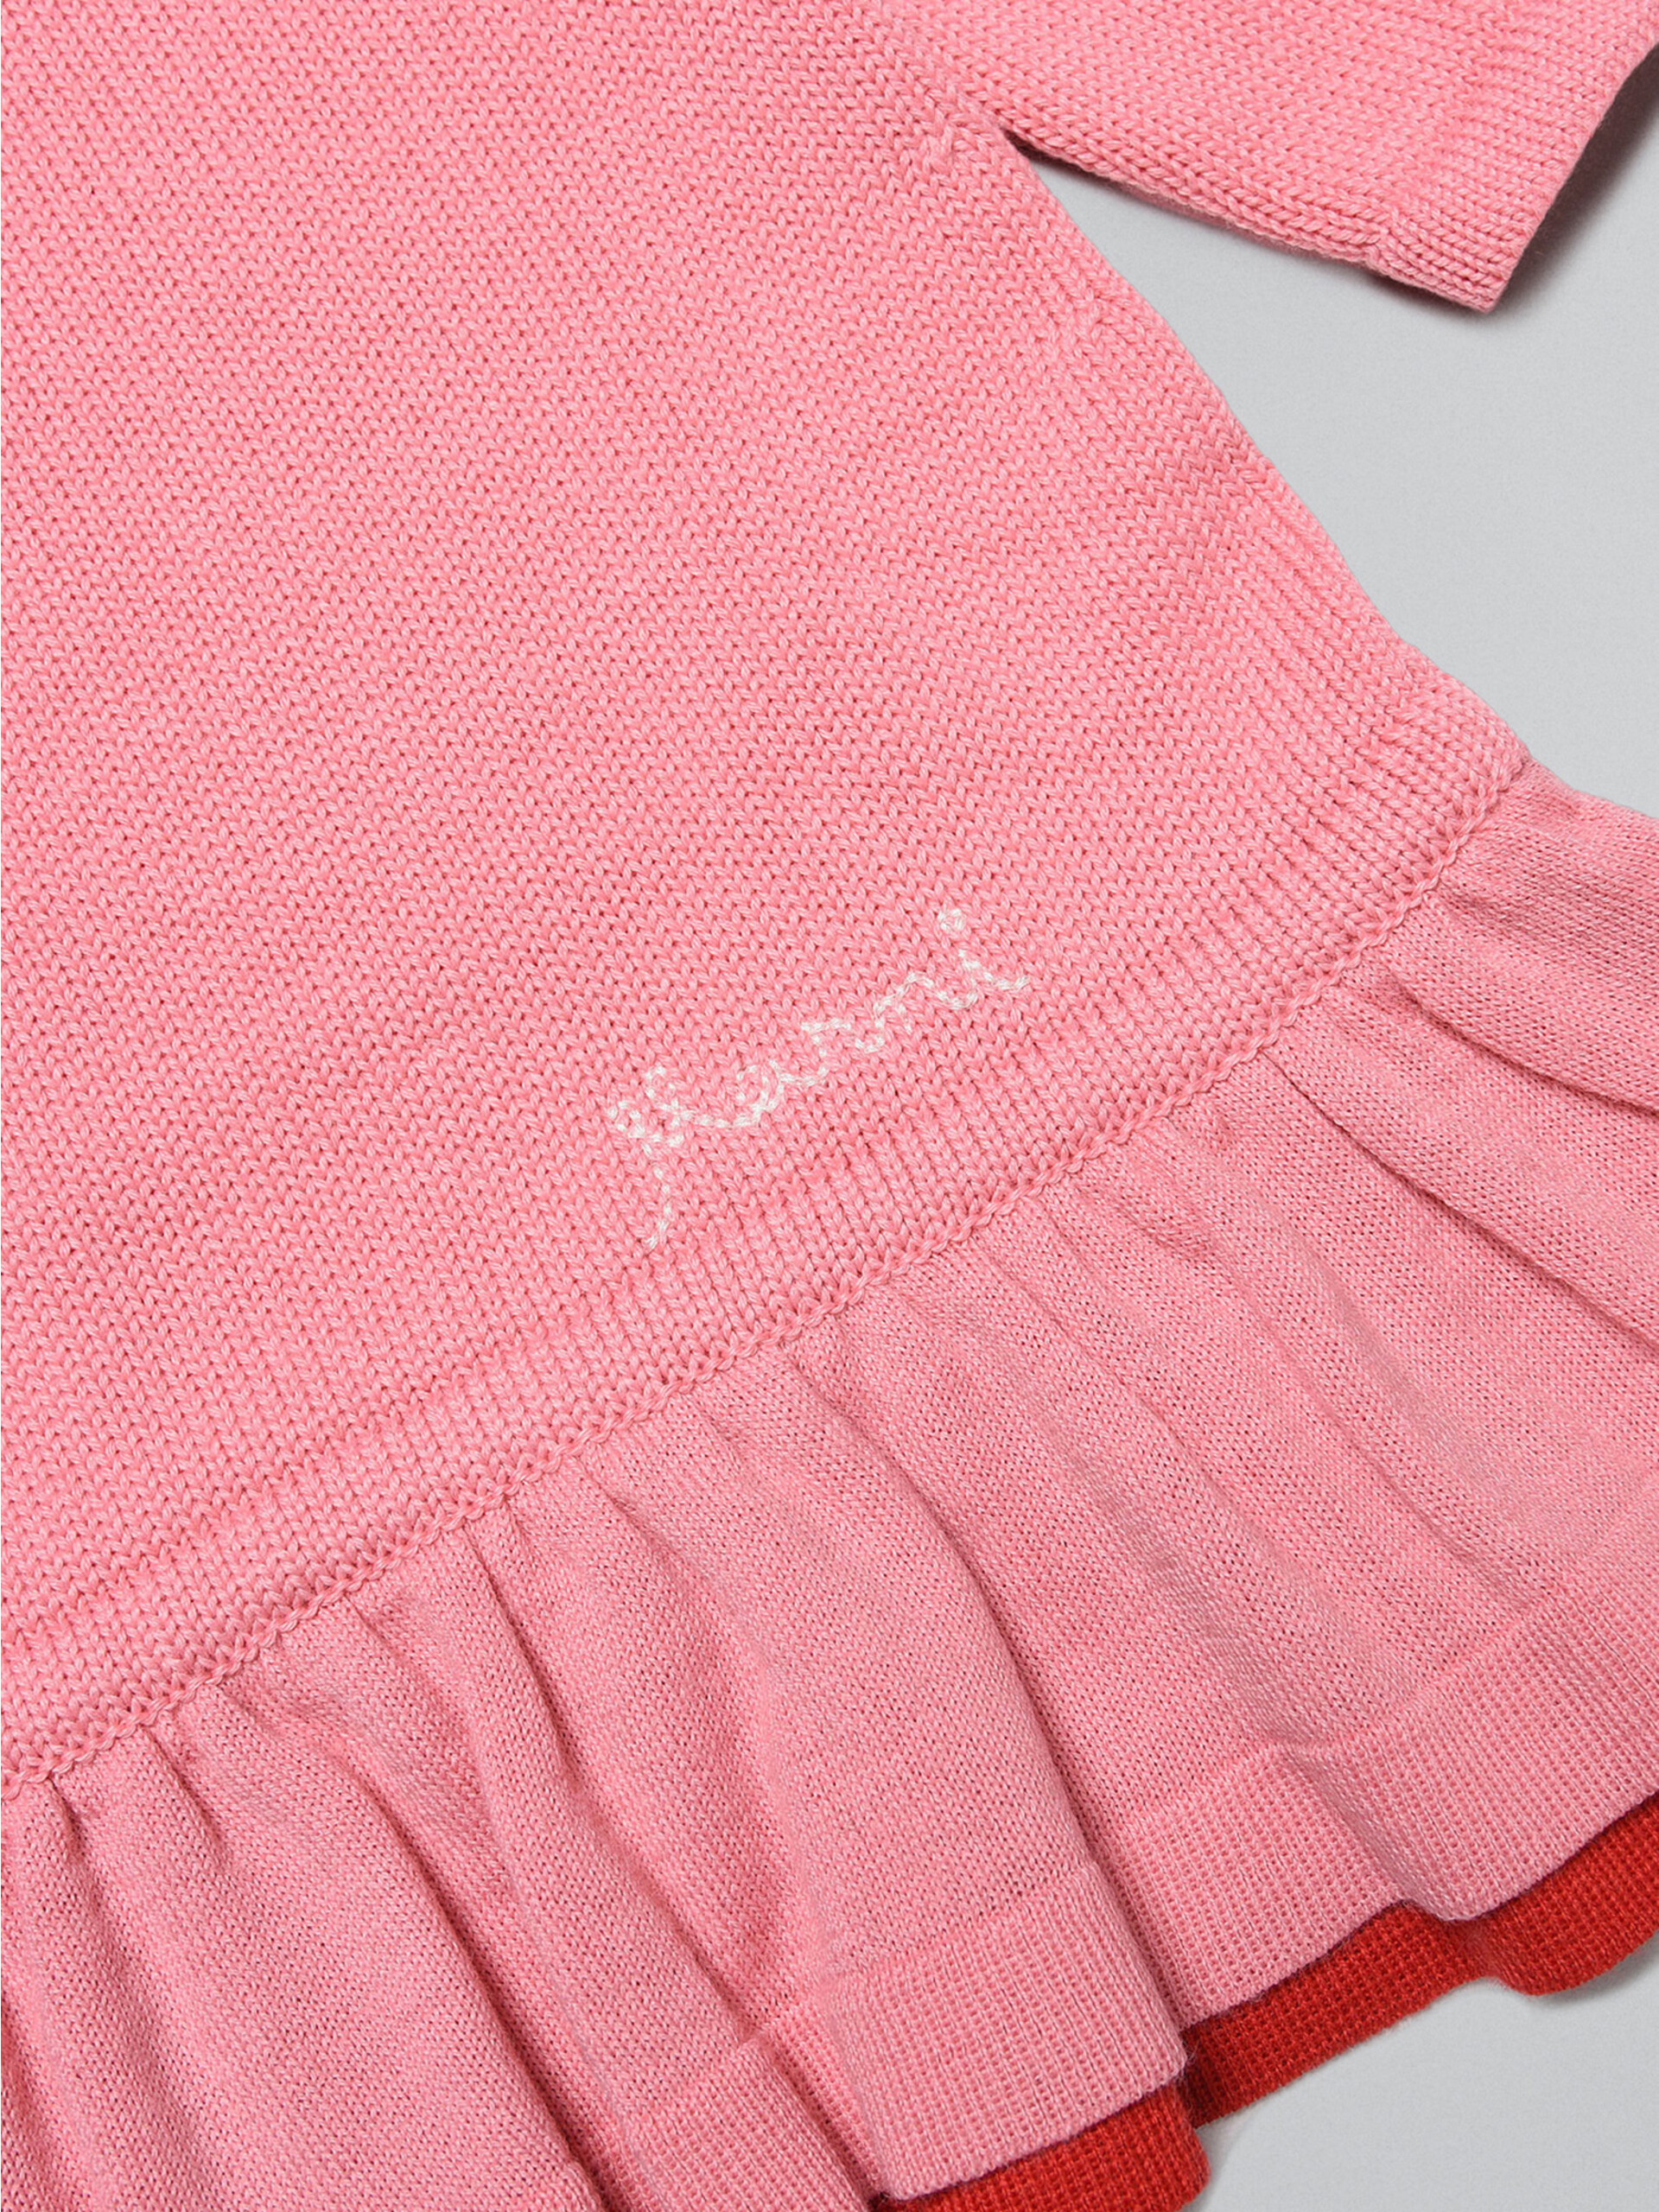 Pink jumper dress with flounce hem - Dresses - Image 3